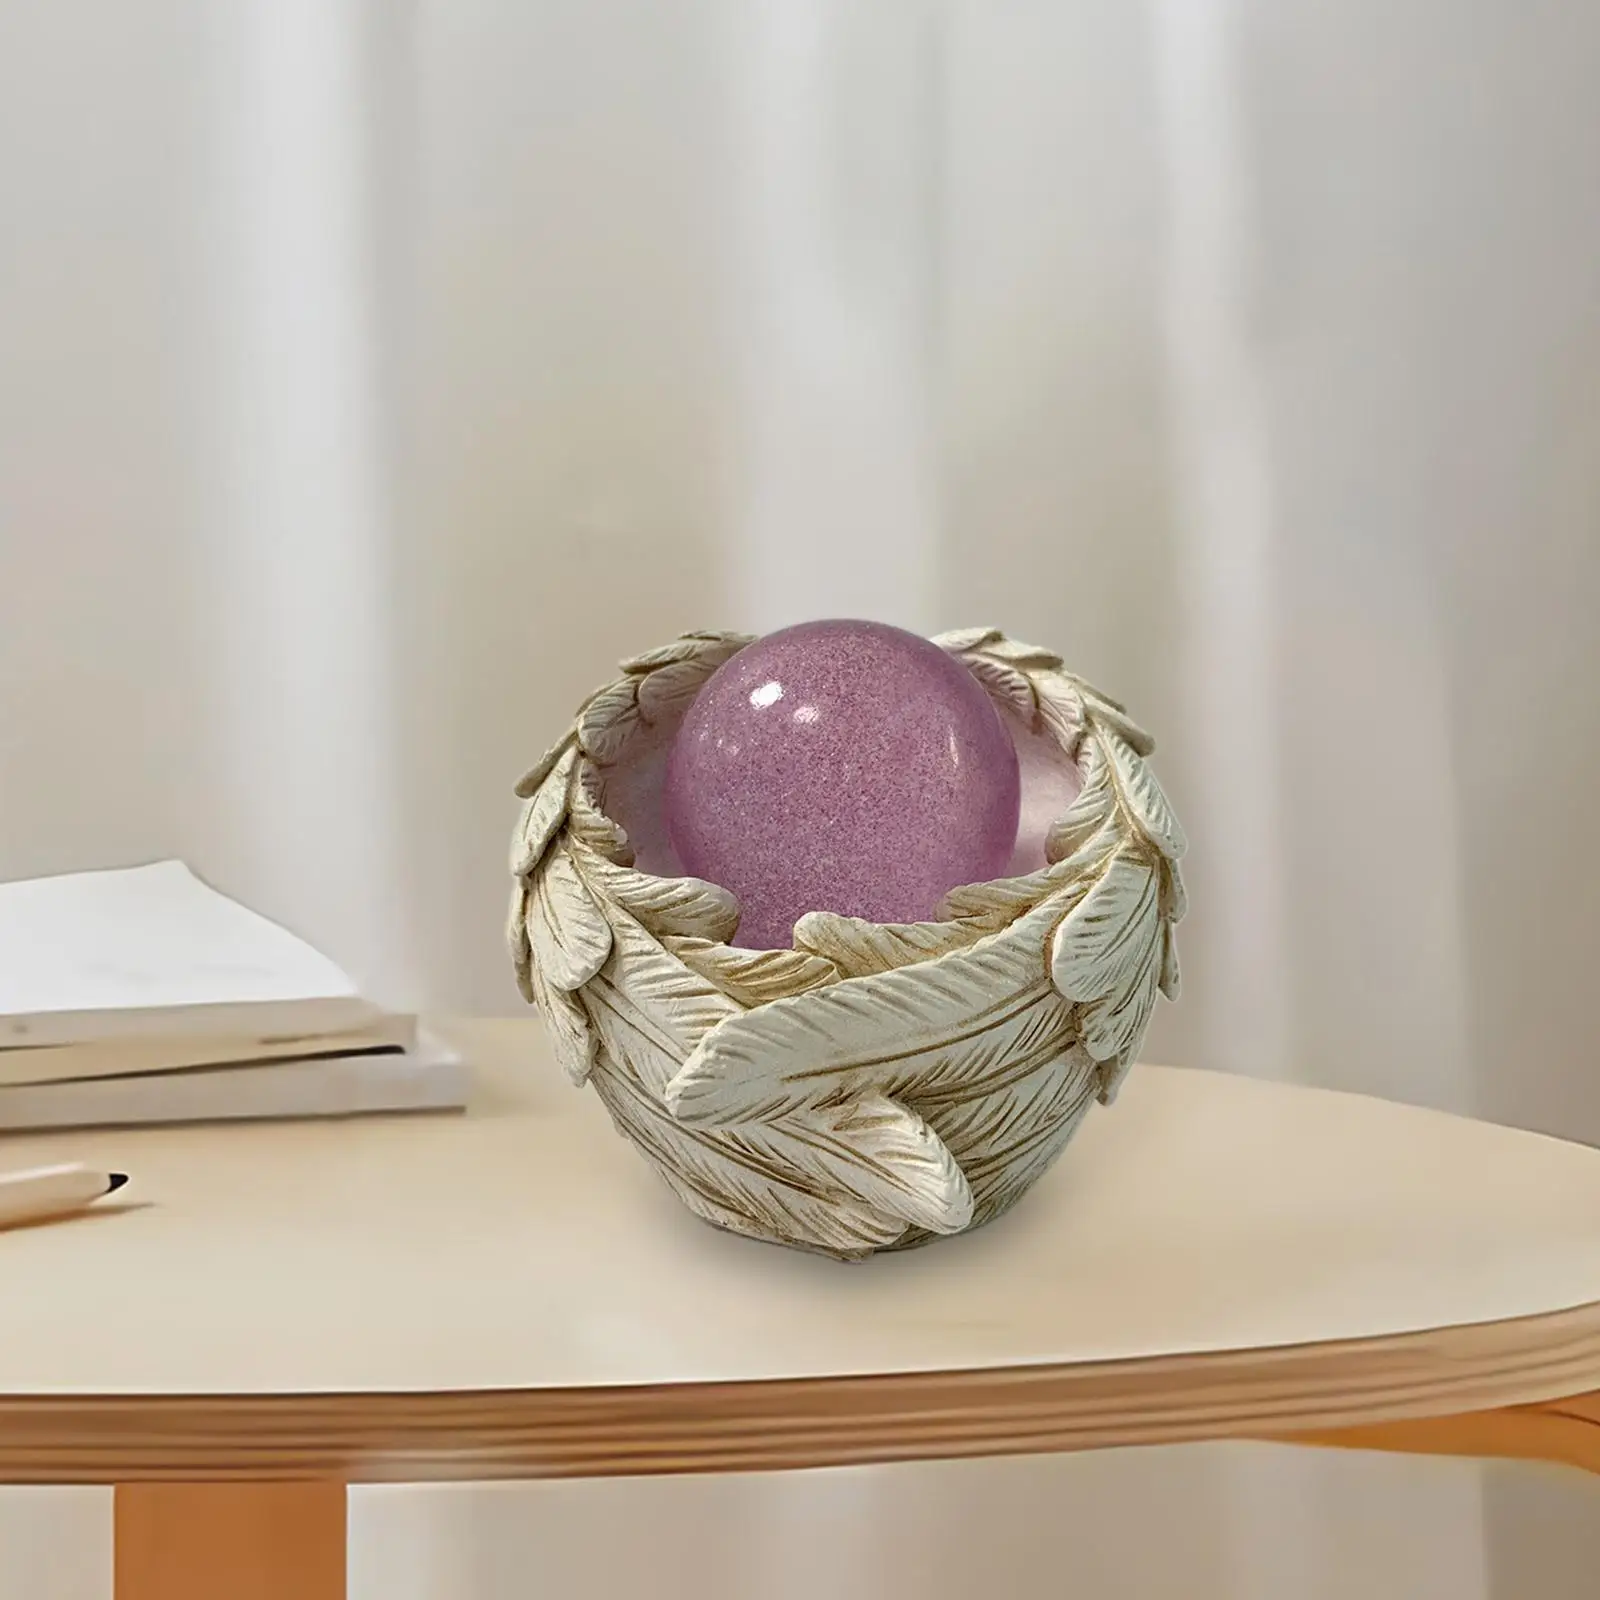 Resin Light up Angel  Ball Figurine Crafts  Heart Shaped for Bookshelf Desktop Home Table Decor